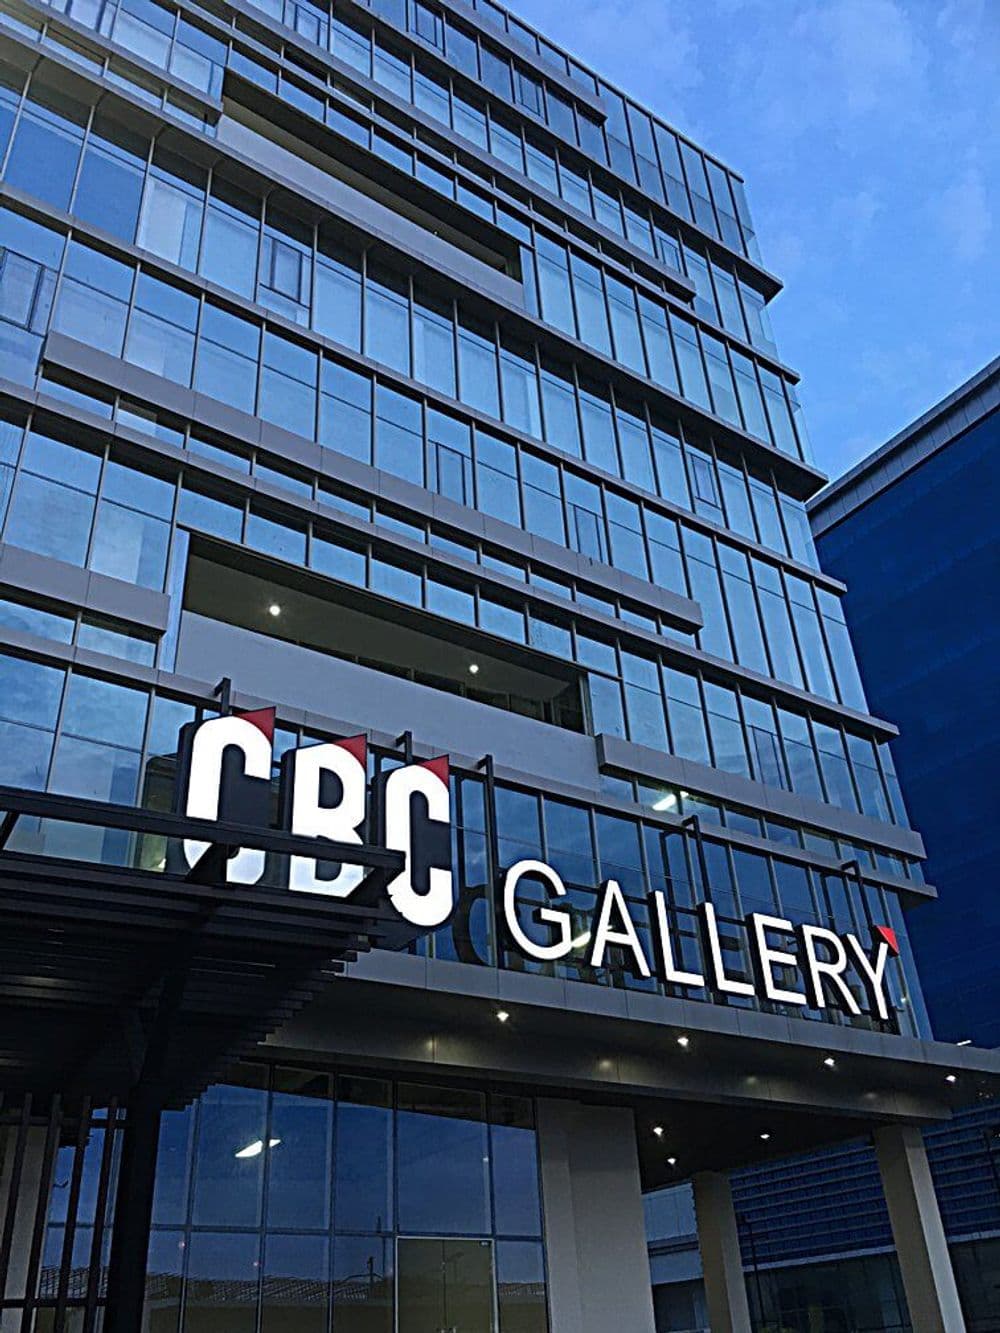 CBC Gallery